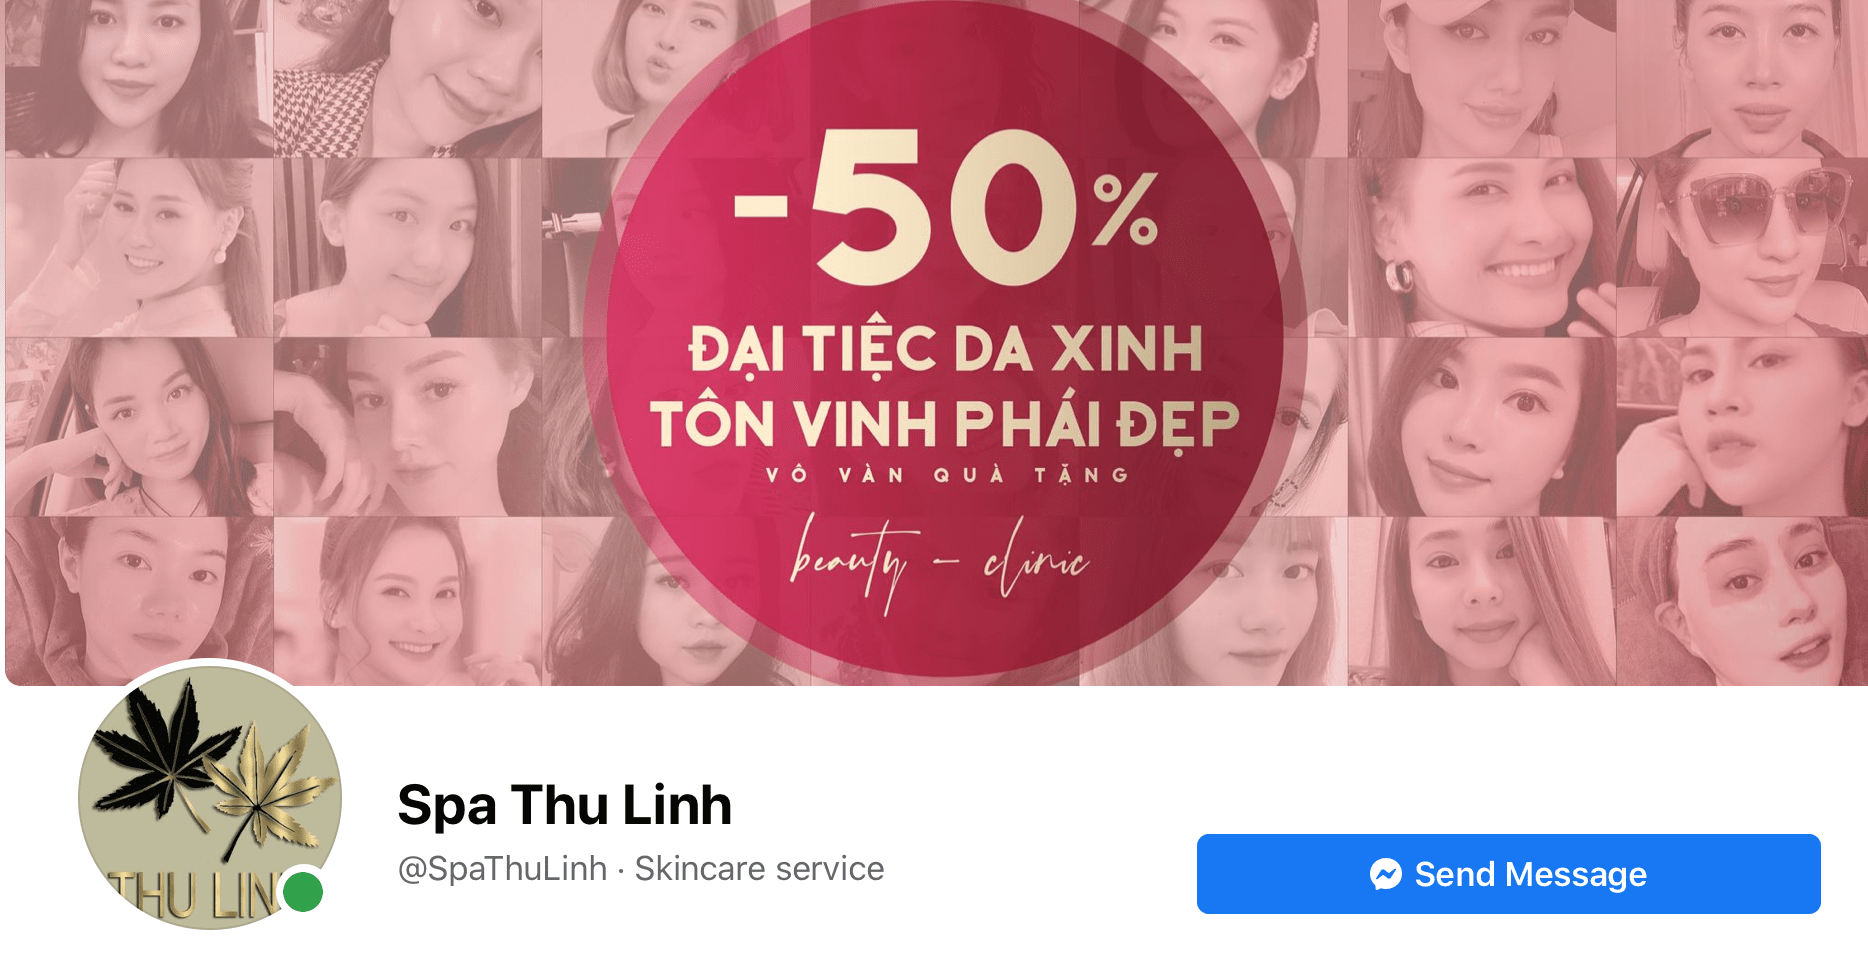 Thu Linh Spa